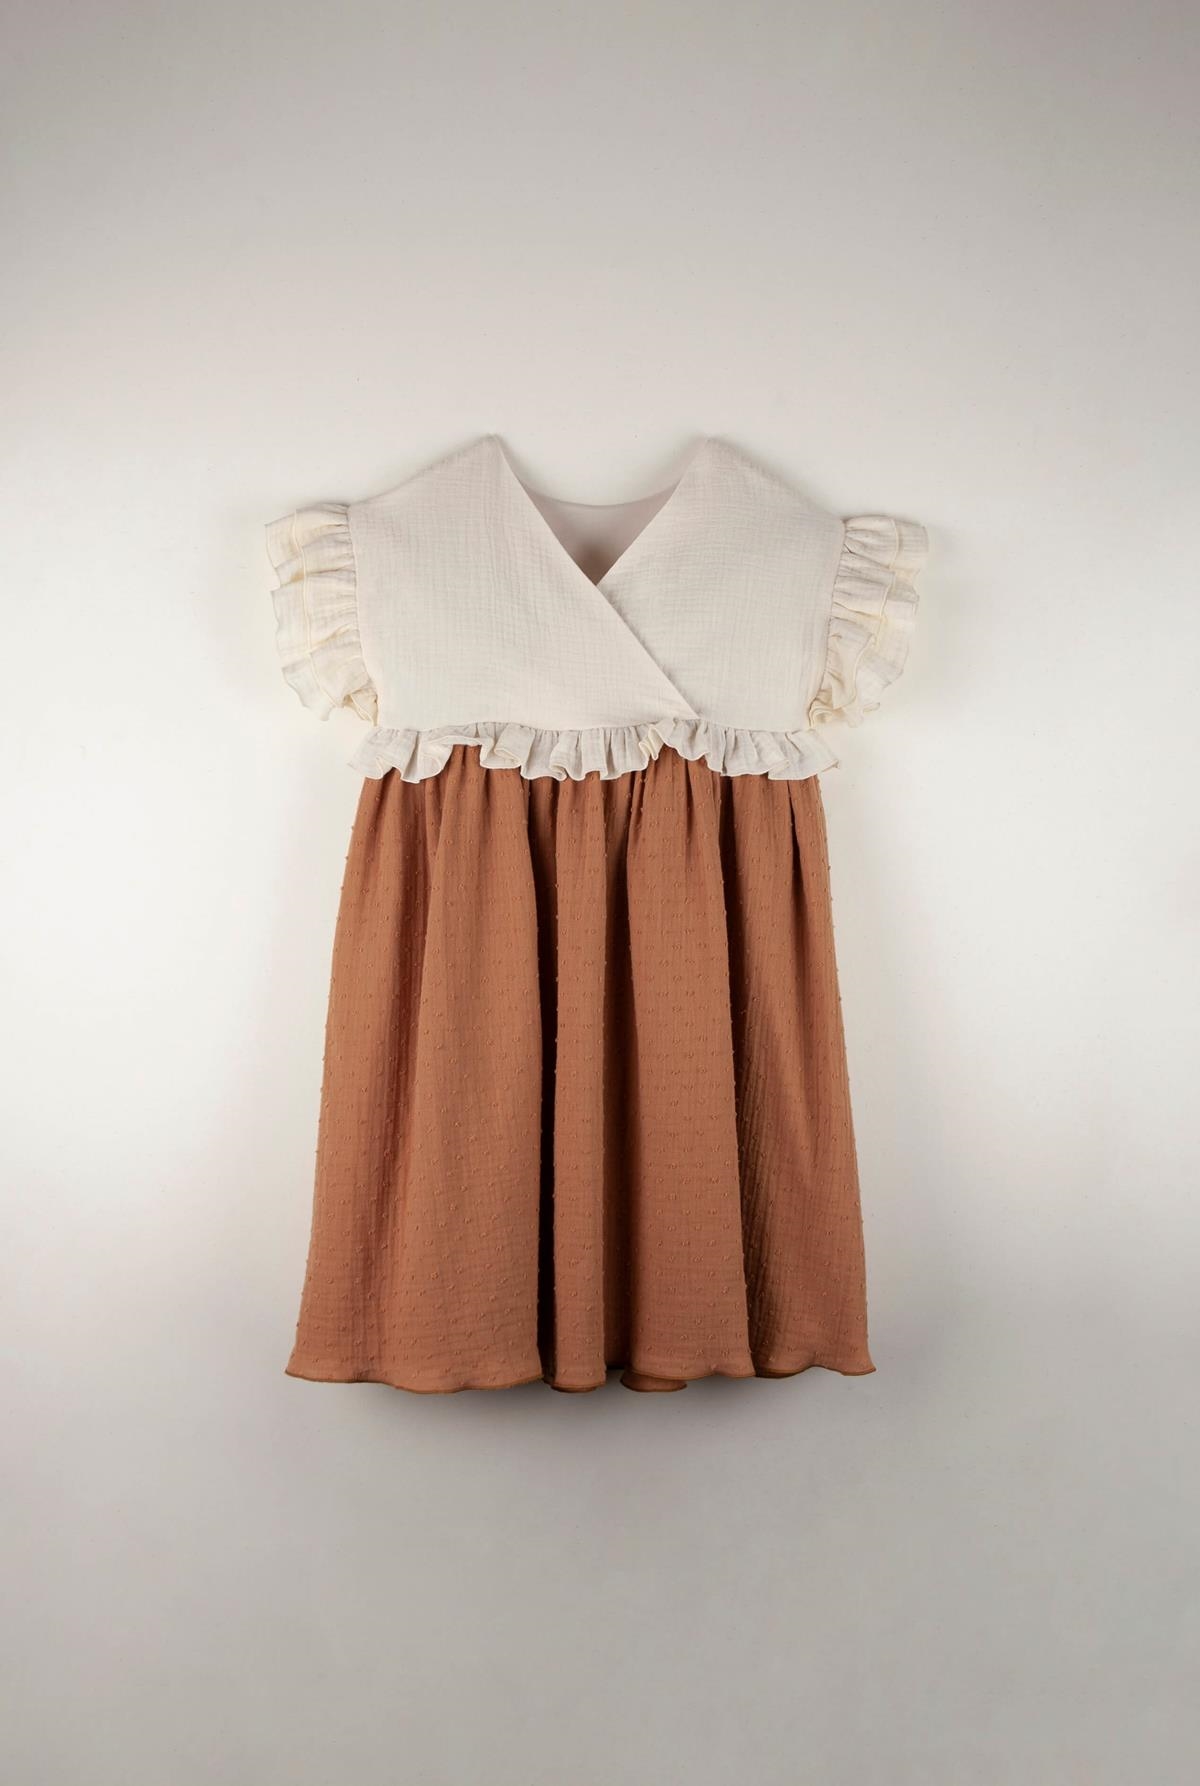 Mod.32.4 Terracotta organic dress with embroidered yoke | SS22 Mod.32.4 Terracotta organic dress with embroidered yoke | 1